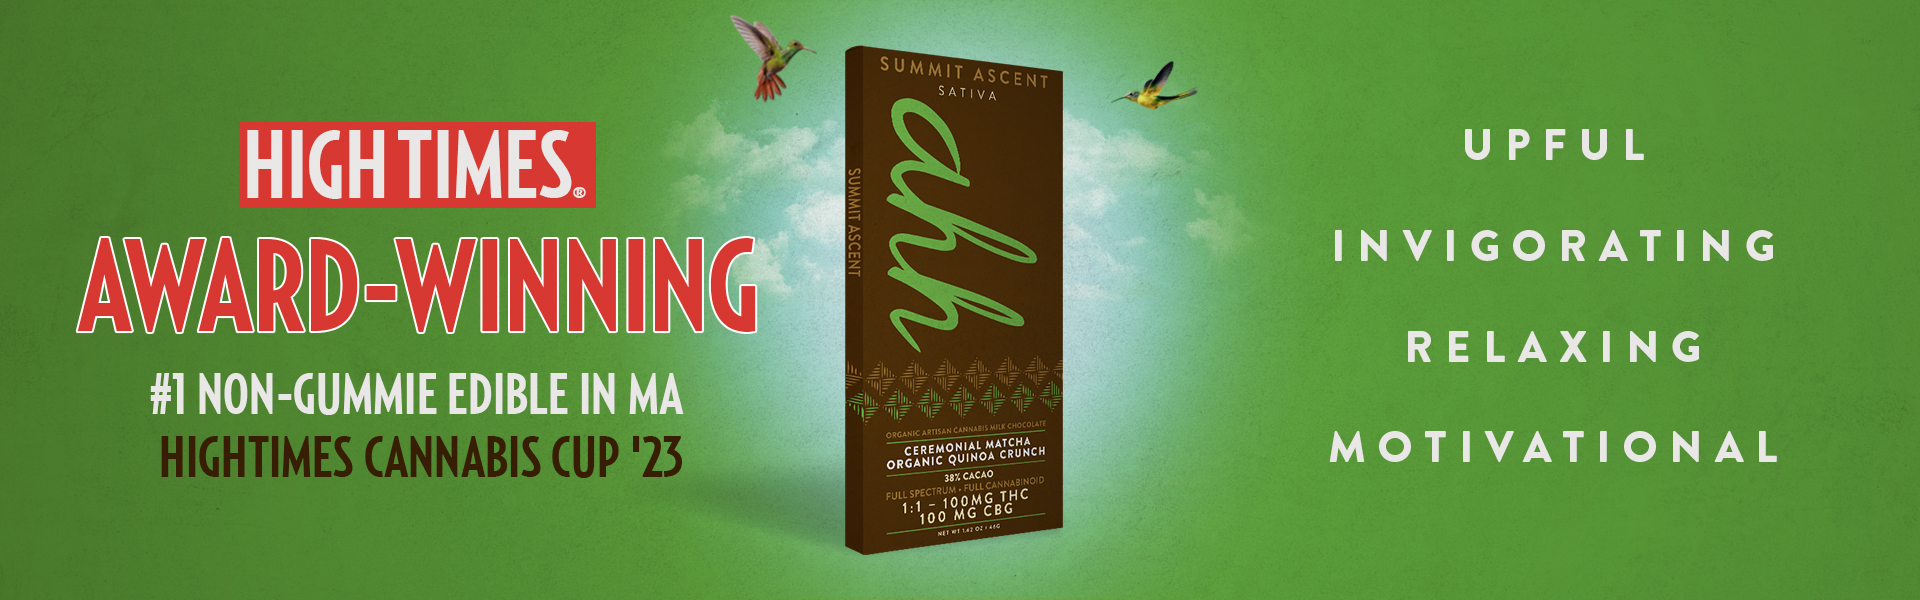 Summit Ascent Sativa, Artisan Cannabis Milk Chocolate: High Times Award-Winning First Place: Edibles Chocolate Non-Gummies, High Times Cannabis Cup Massachusetts '23